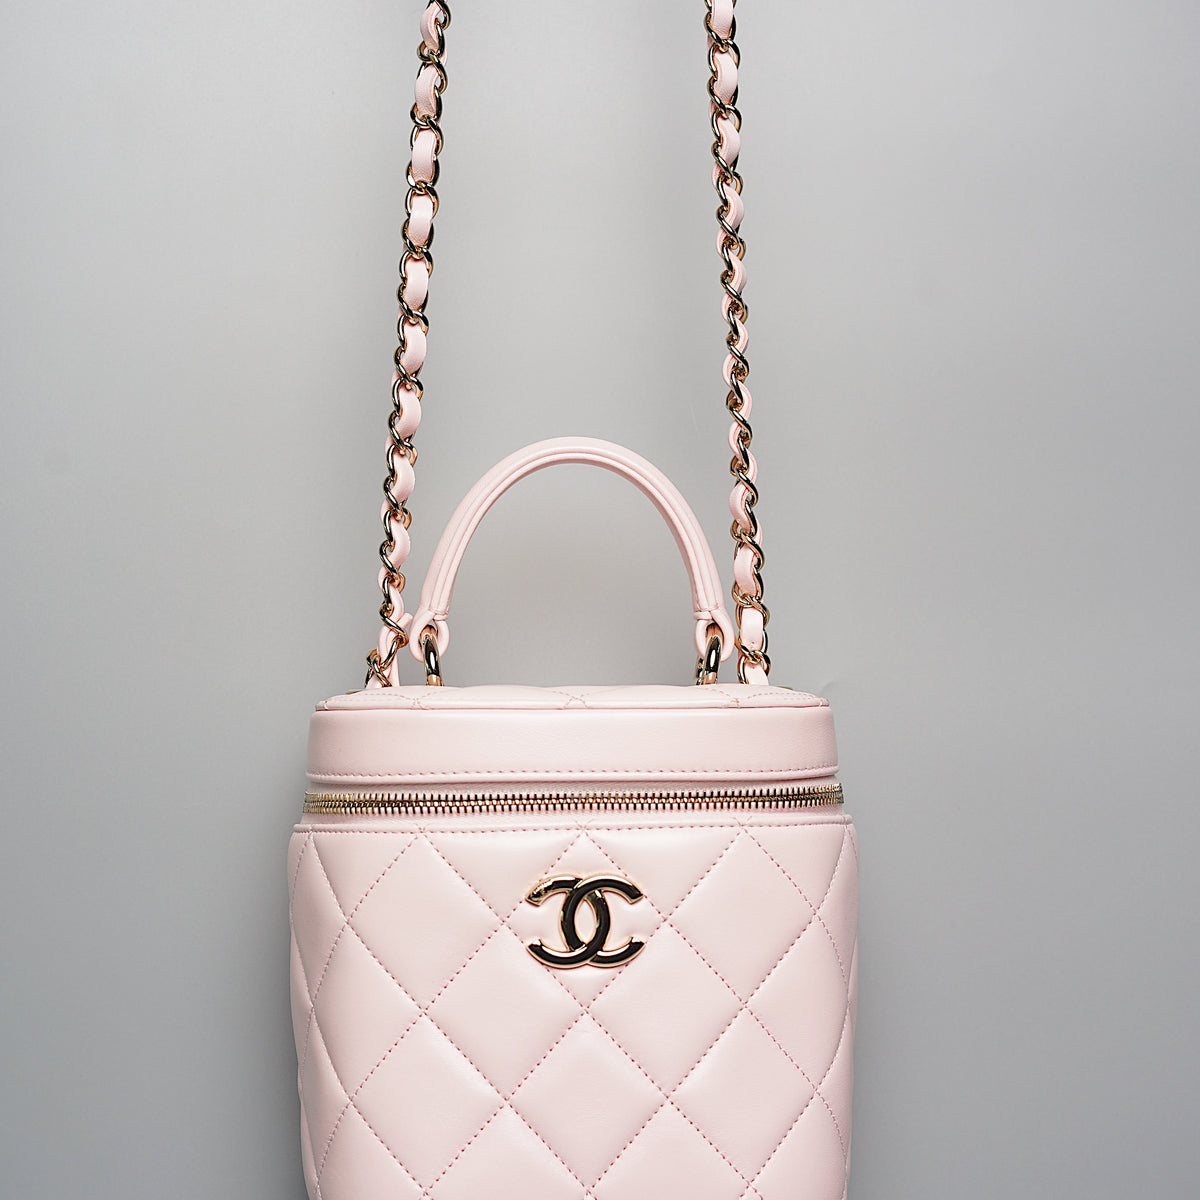 Chanel Trendy CC Vanity Case in Light Pink